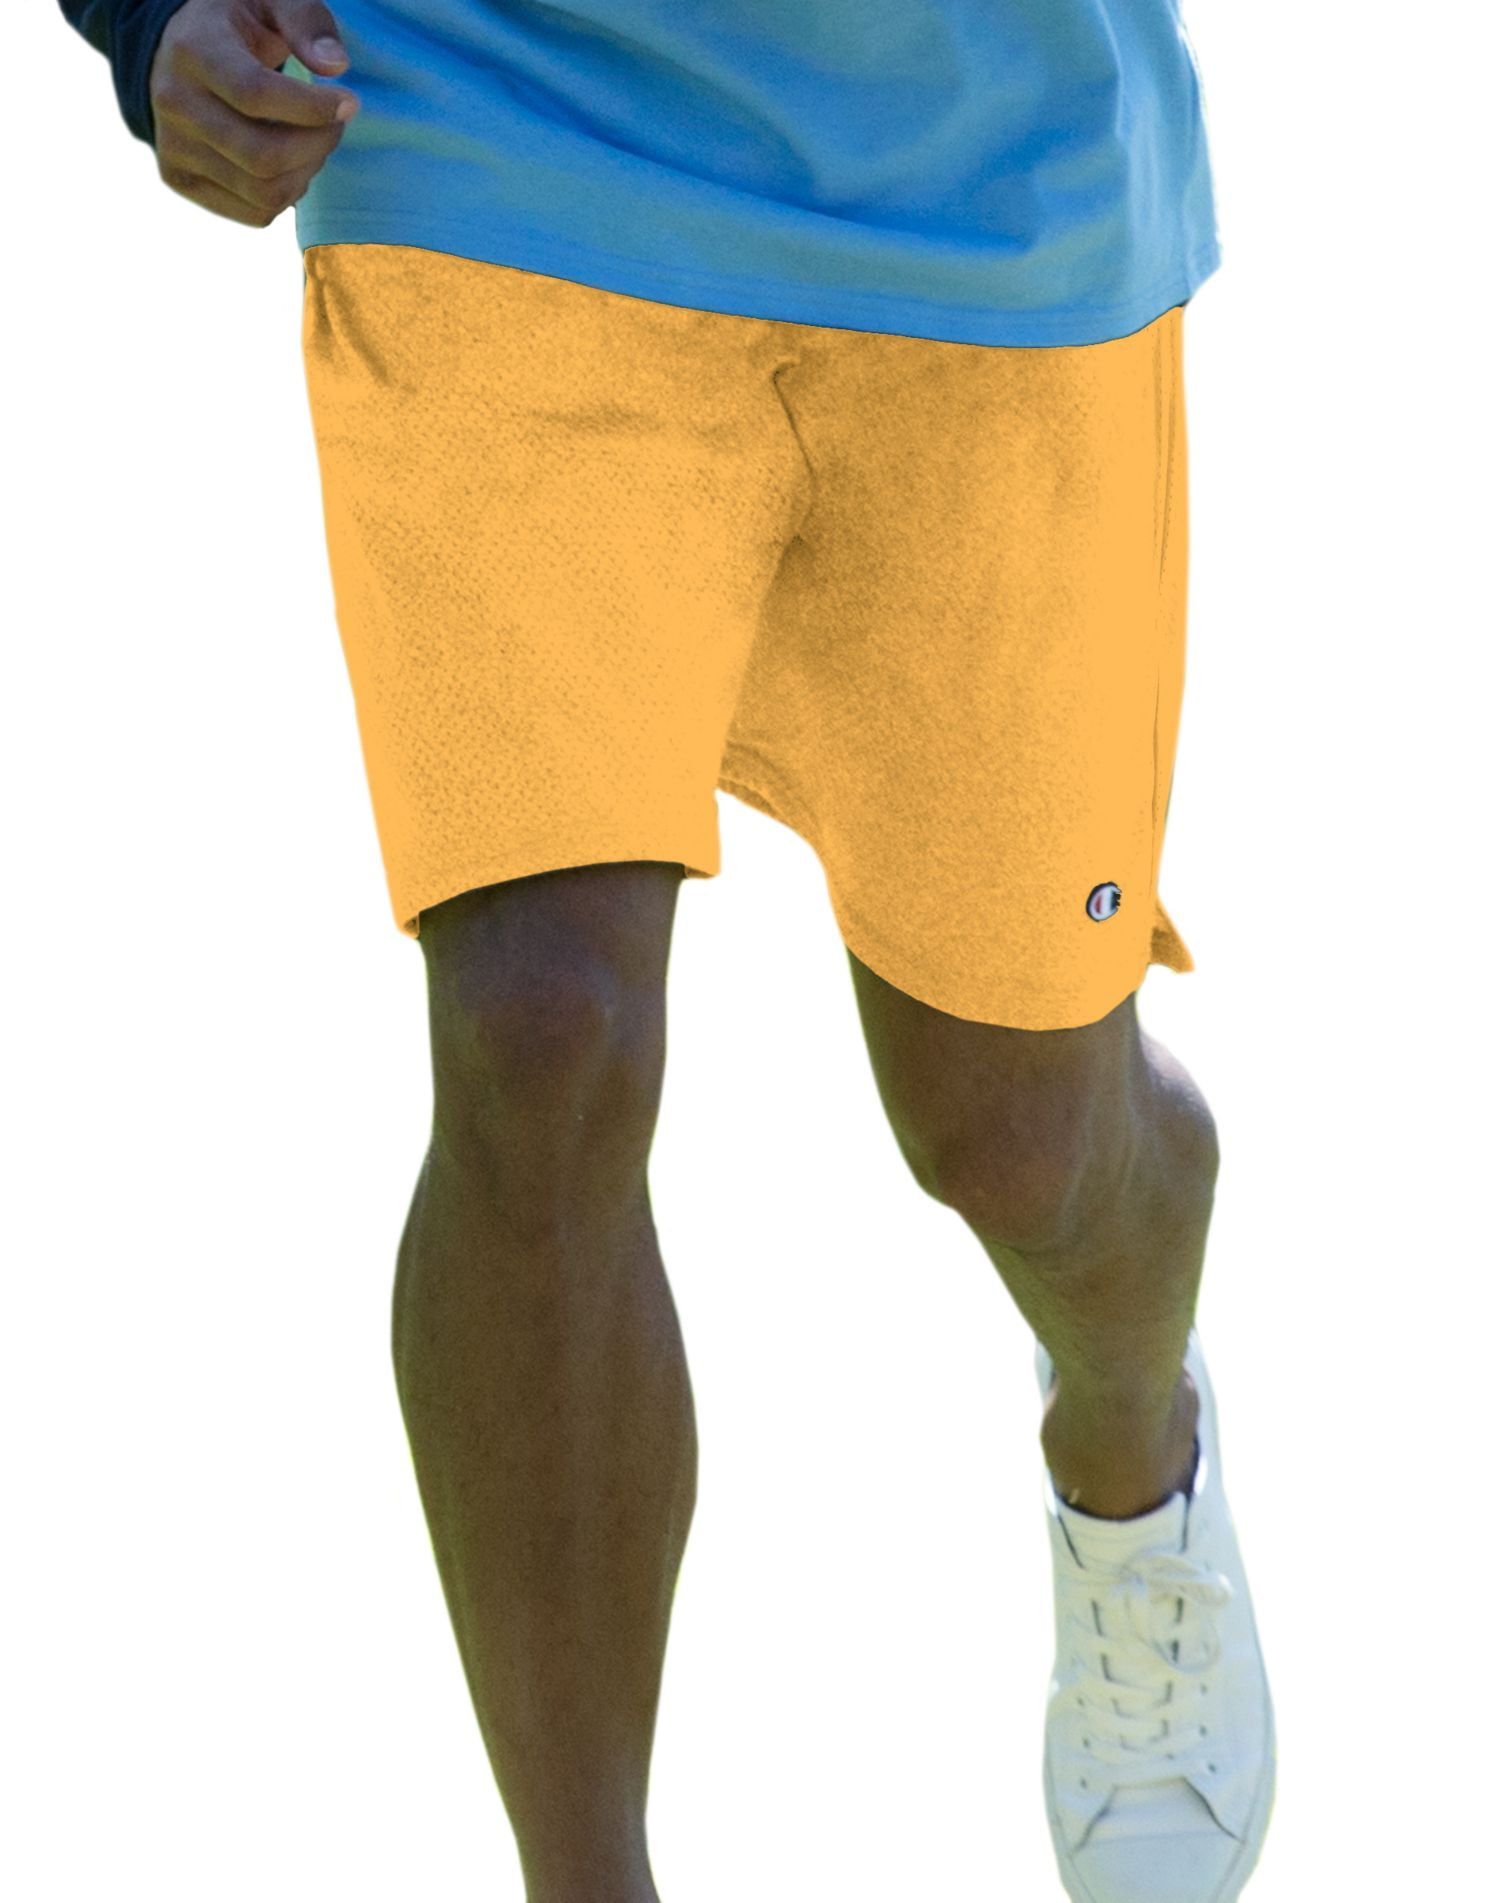 champion mesh shorts with pockets